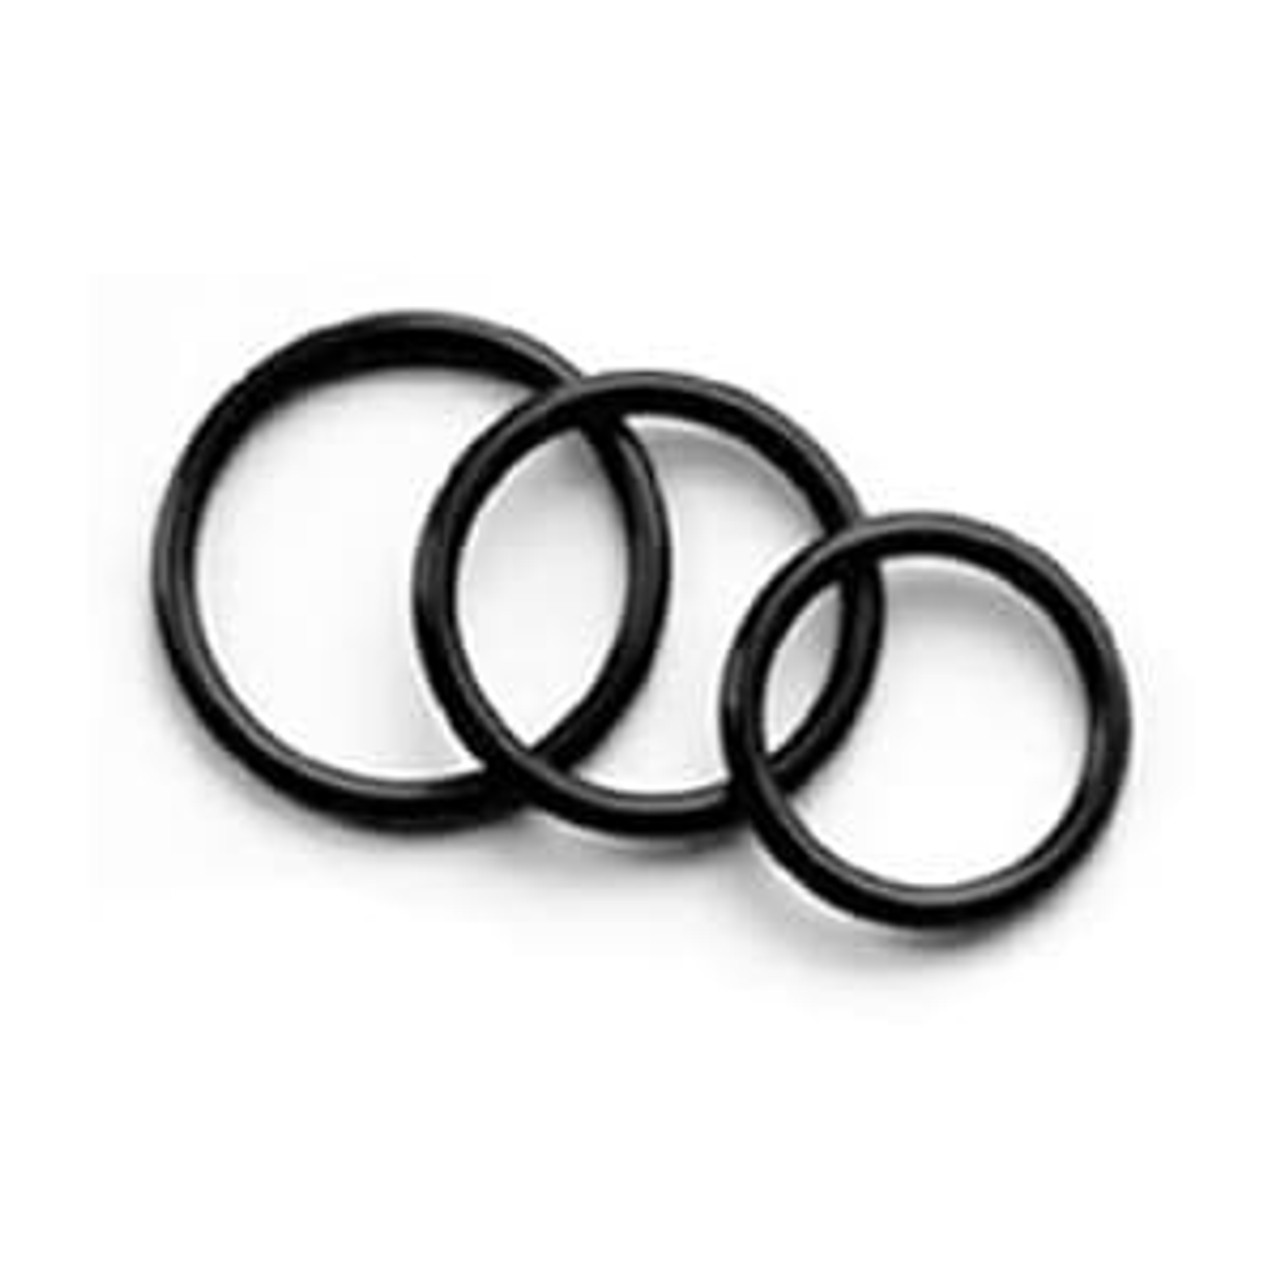 Buy 3 Pack Rubber Erection Ring for Men Online | CondomsFast